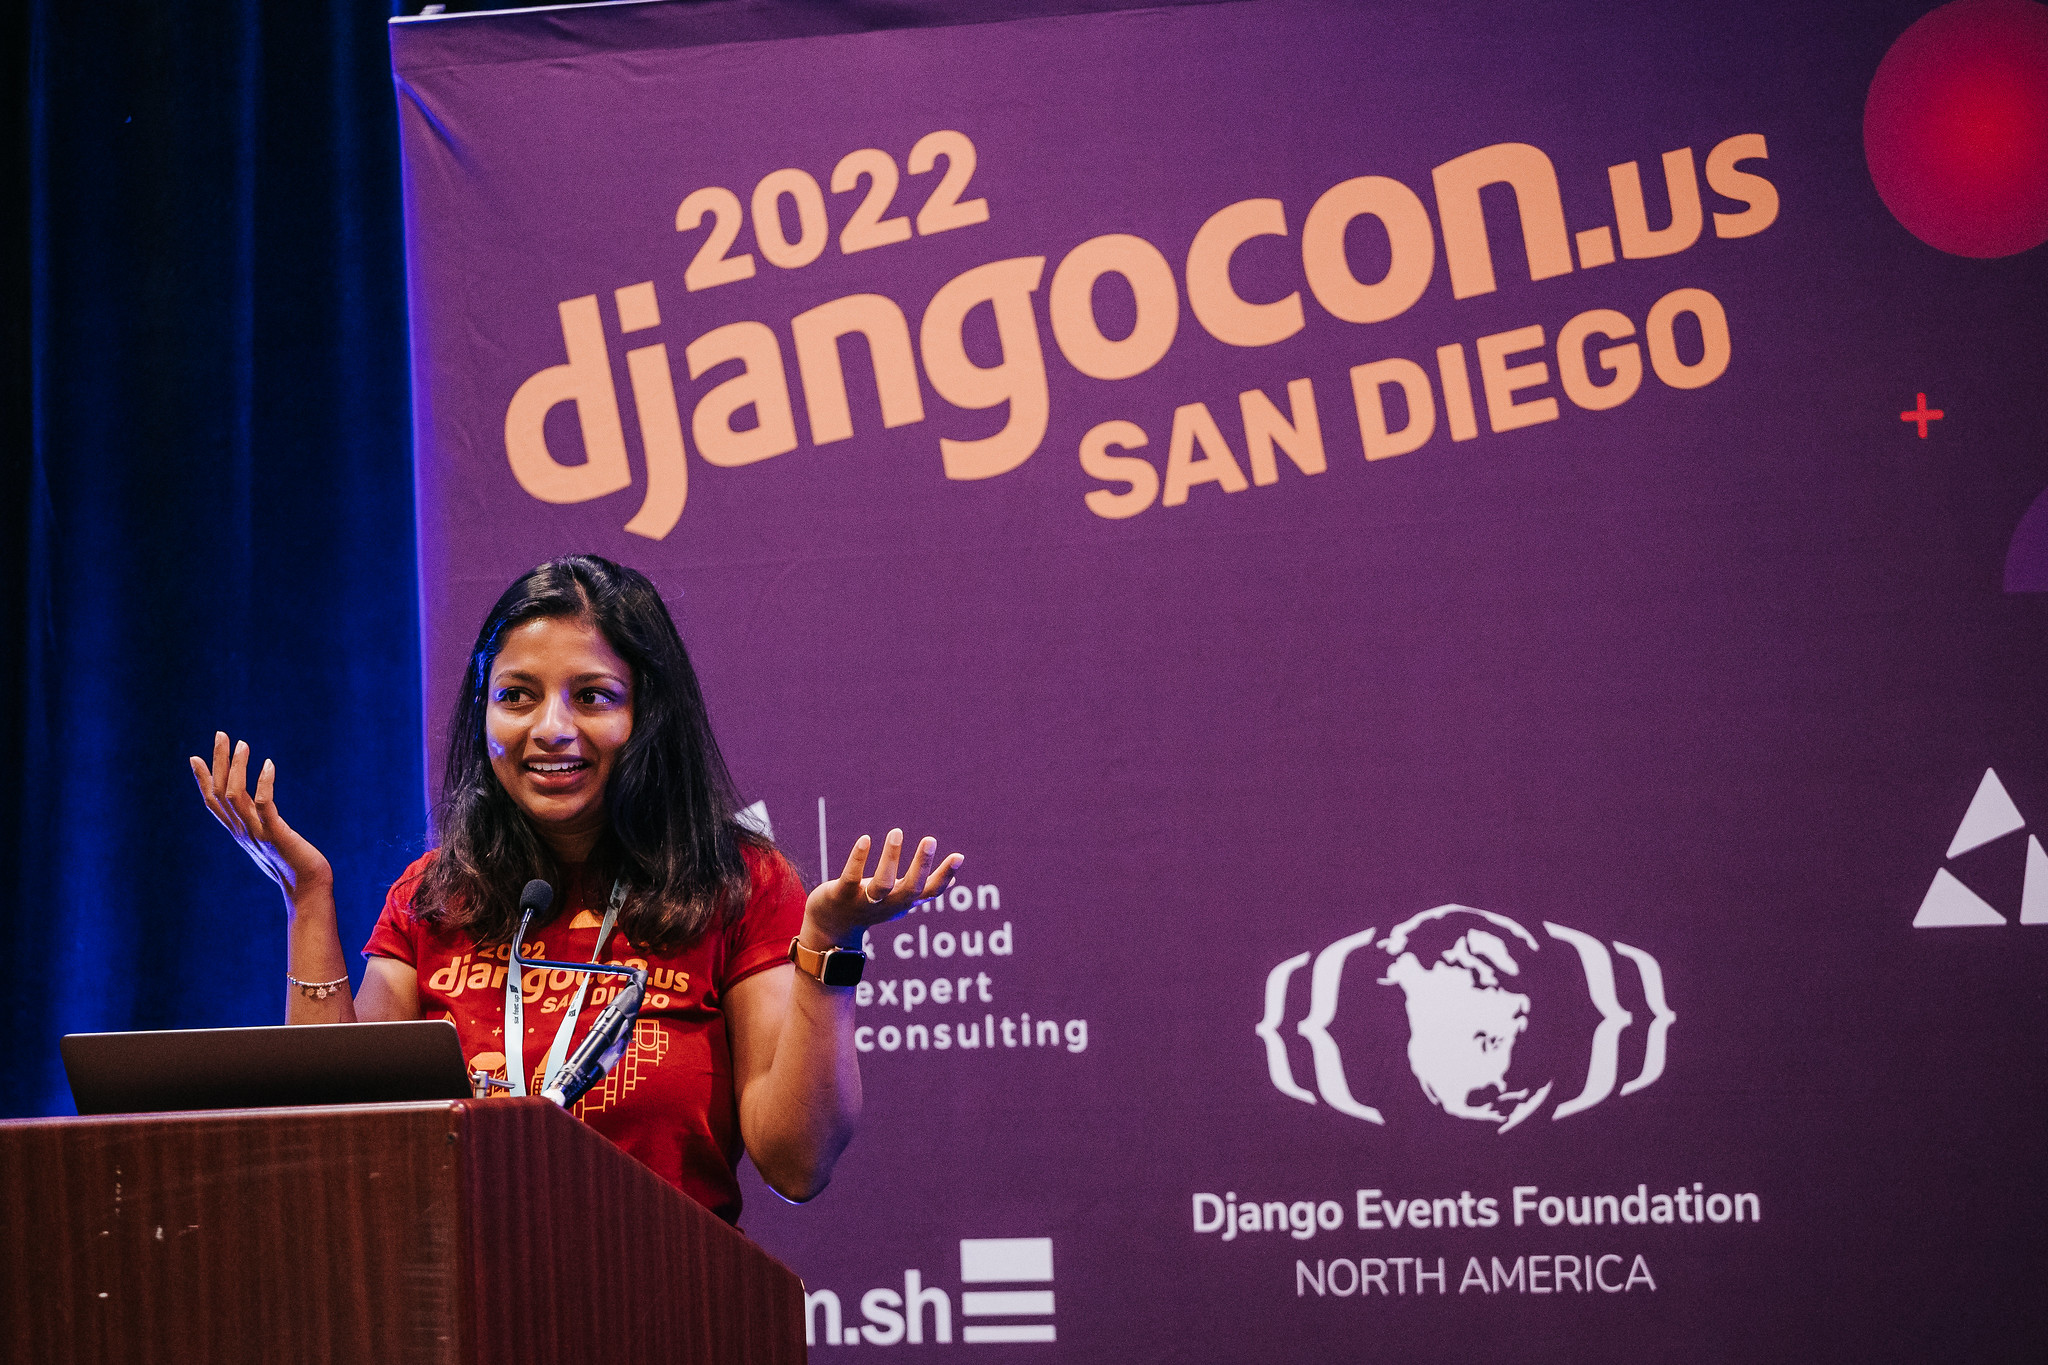 Speaker addressing a crowd at DjangoCon US 2022 in San Diego